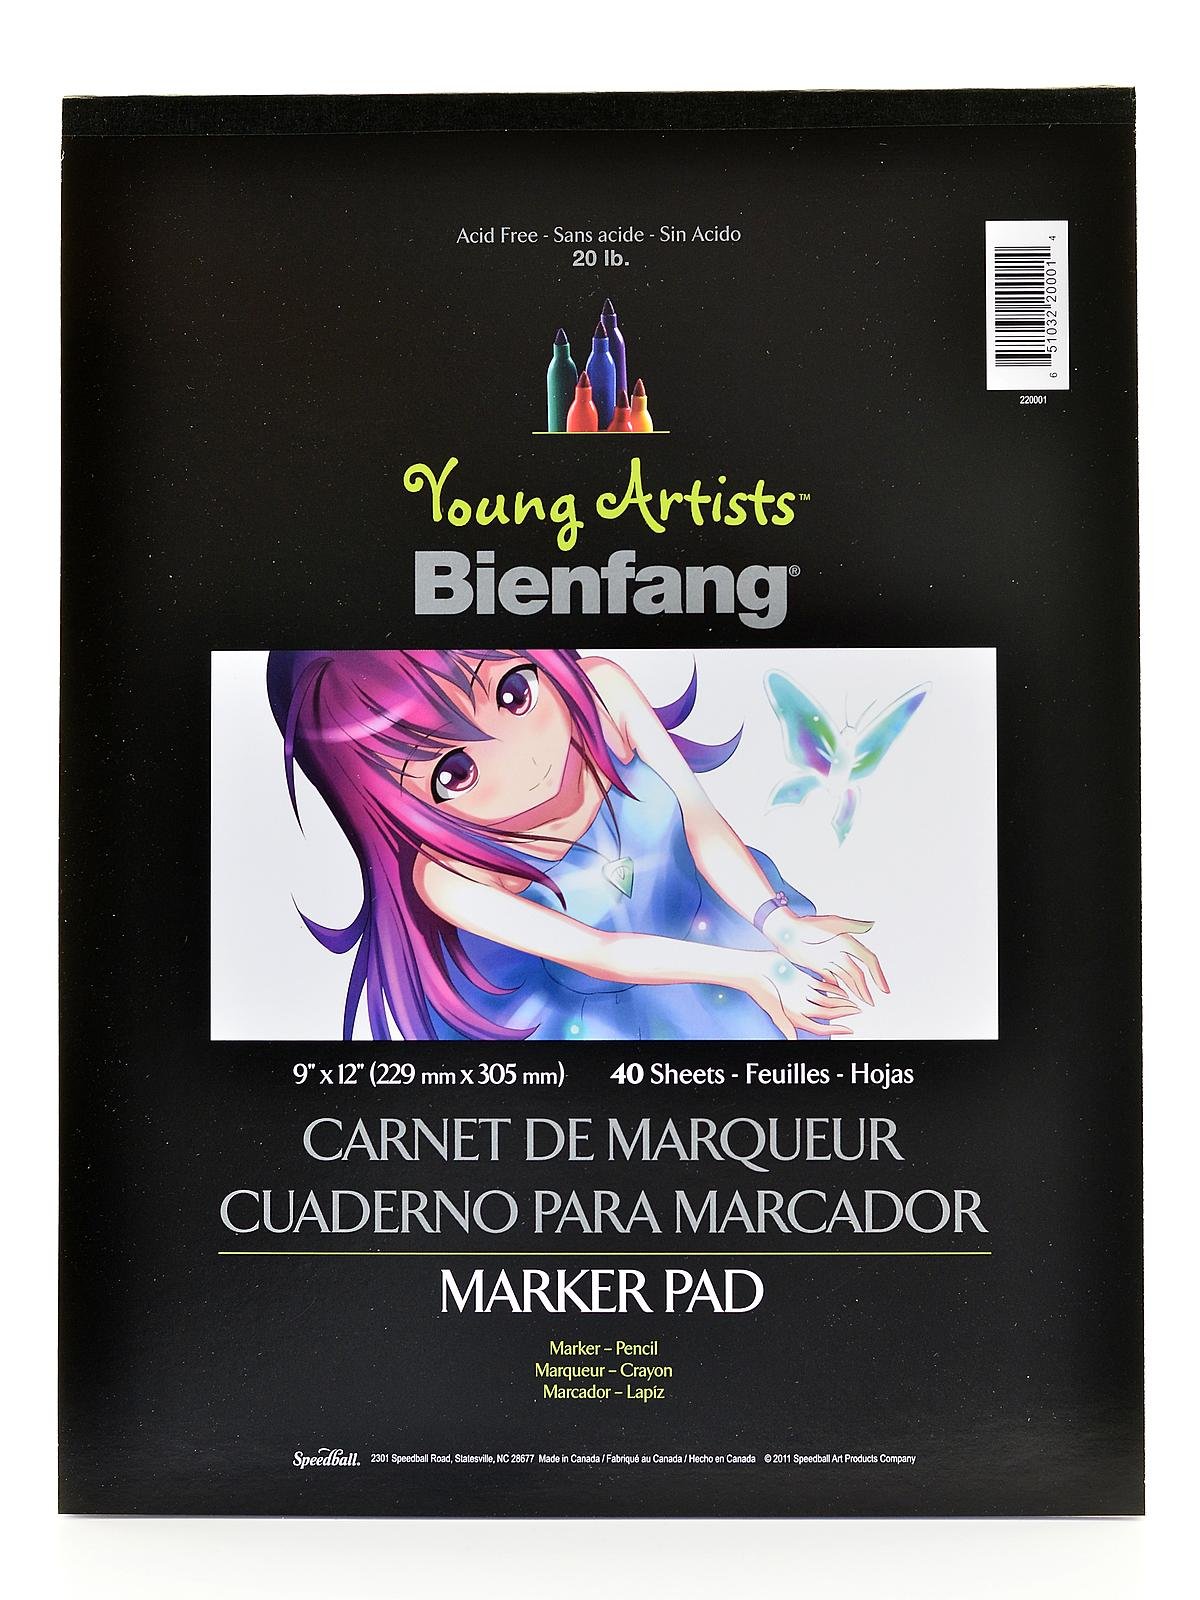 Bienfang - Young Artists Marker Pad